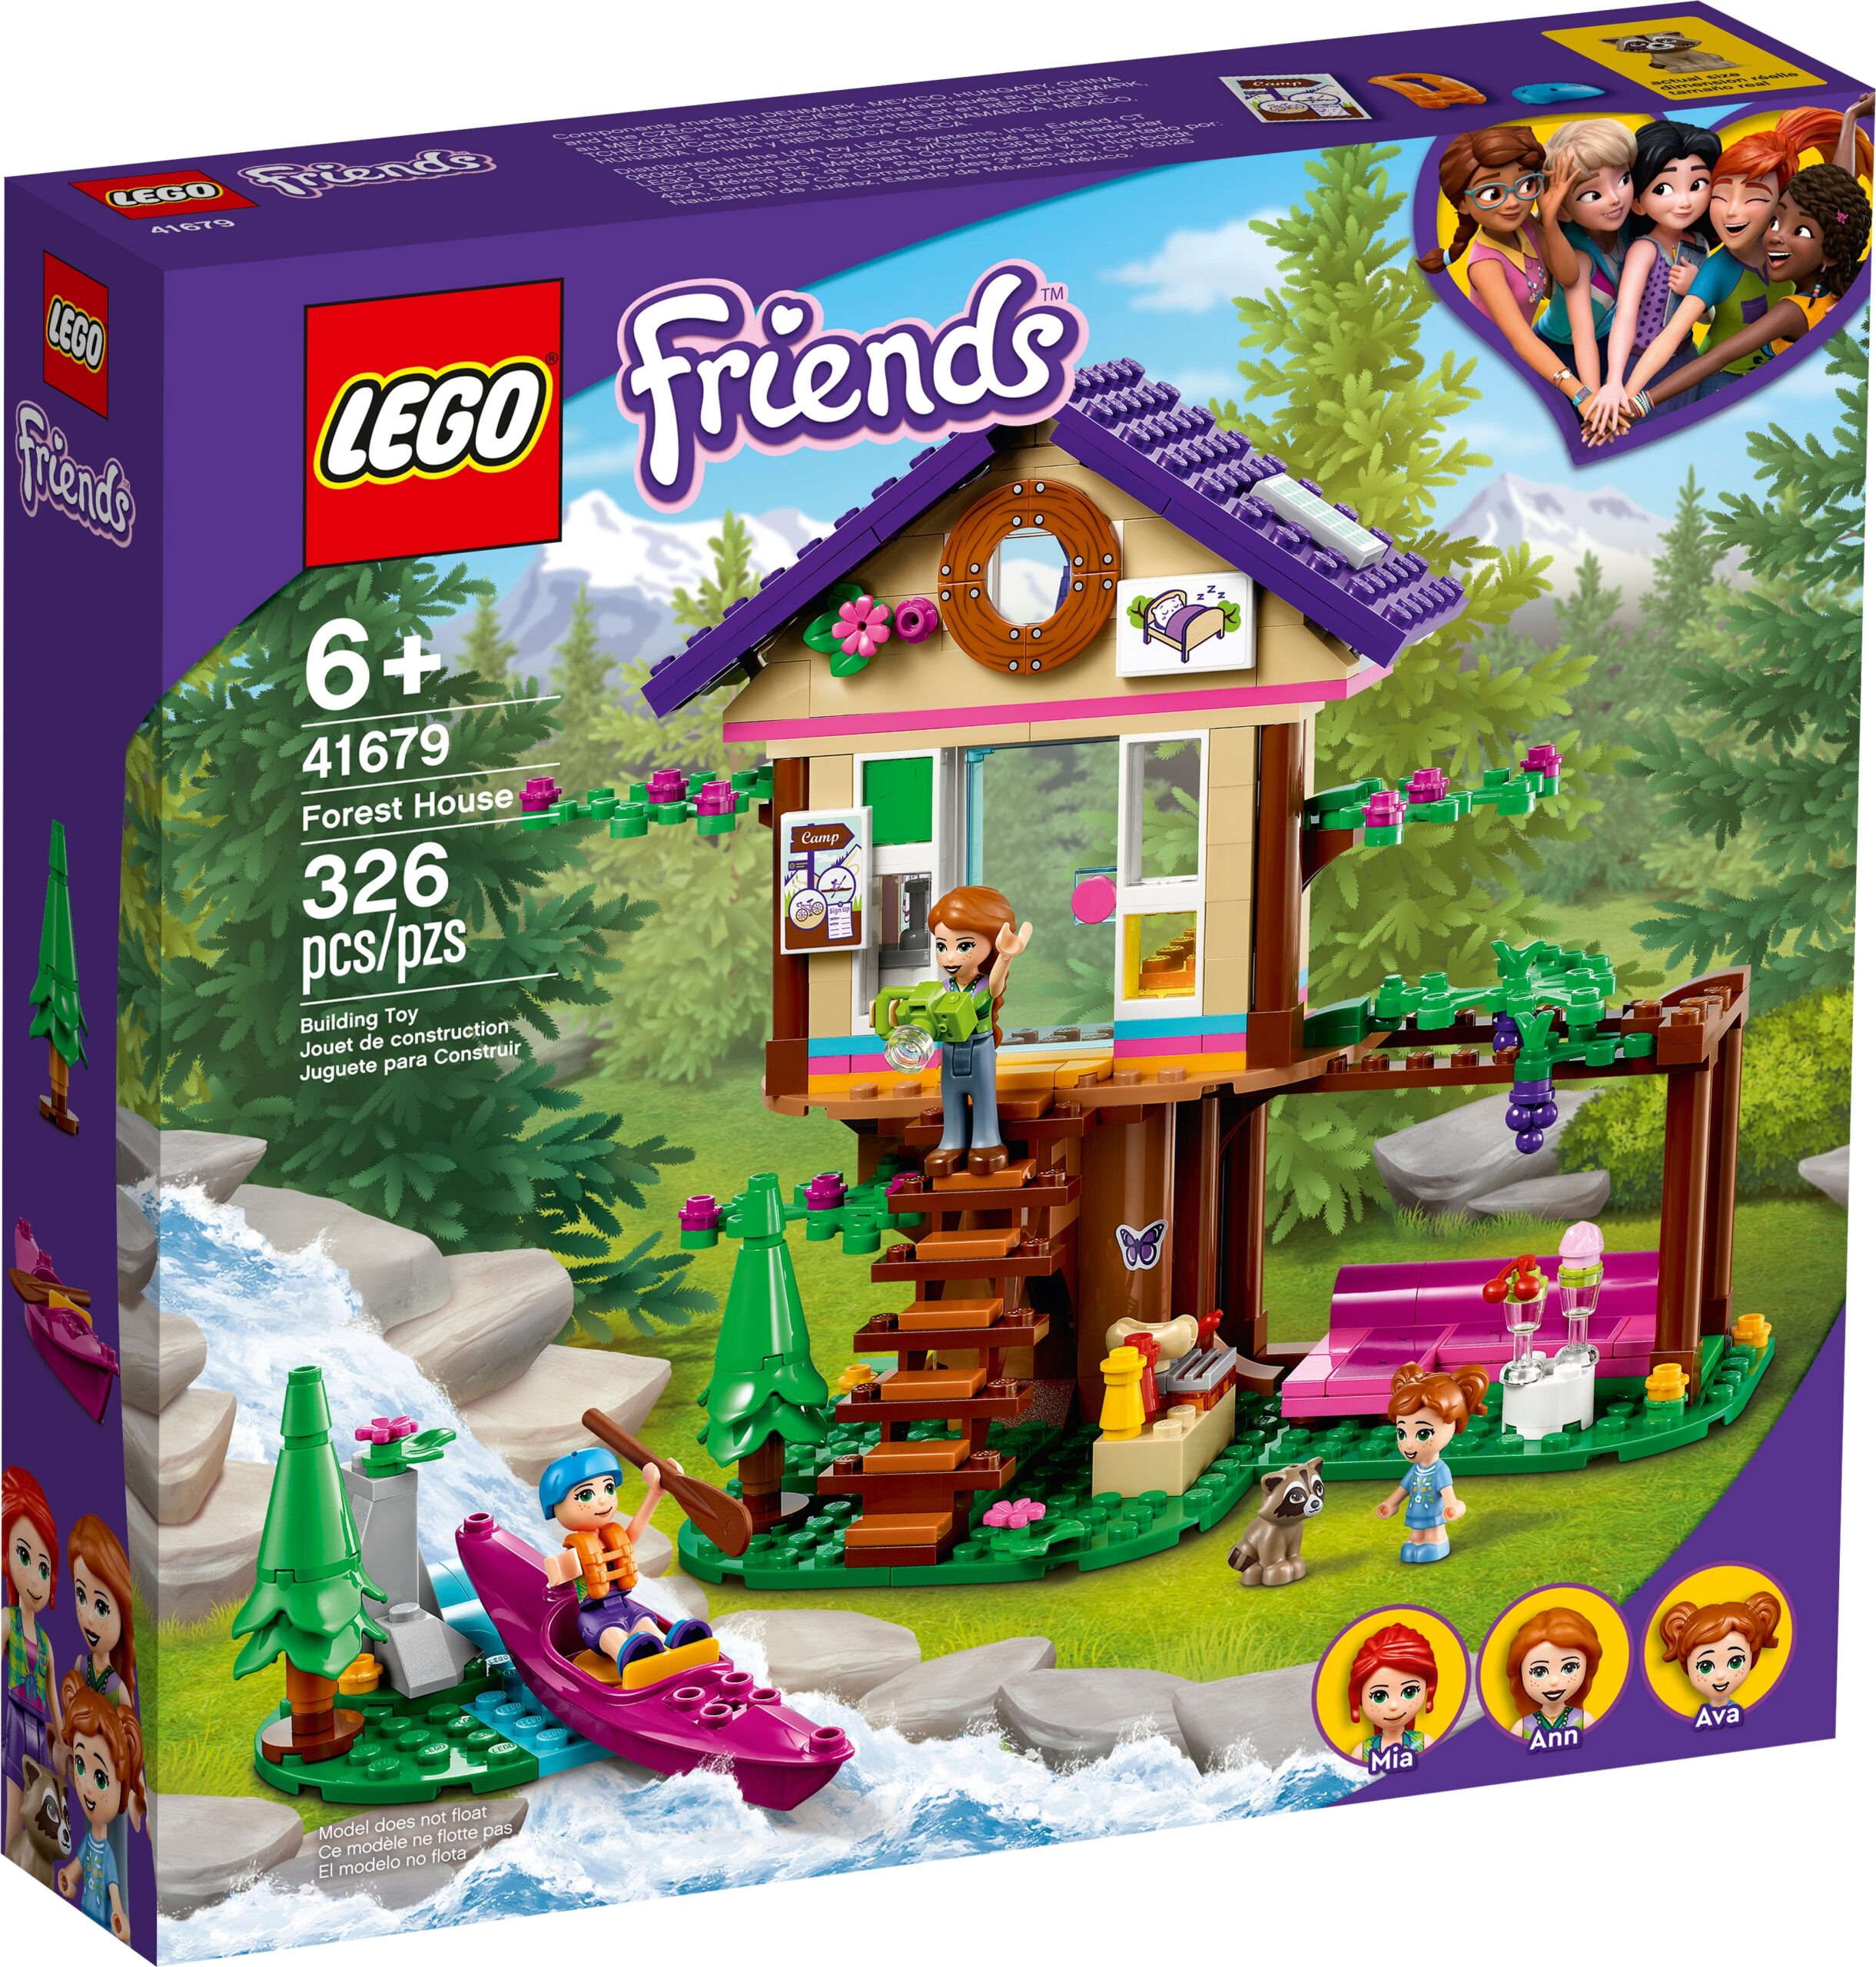 41679 Forest House LEGO Set, Deals Reviews